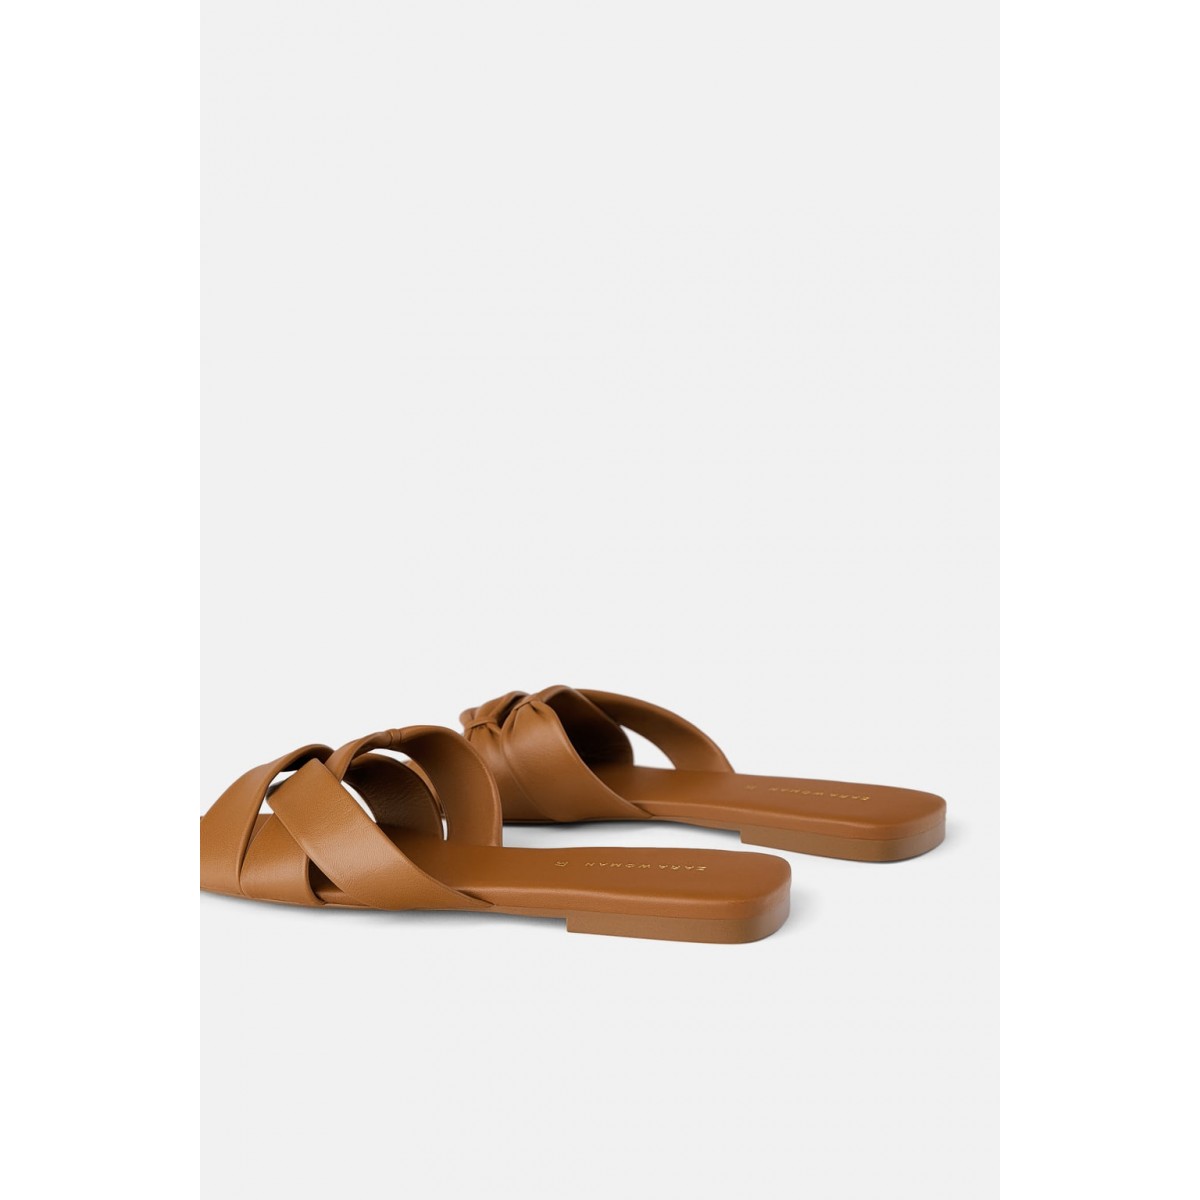 Zara Flat Leather Sandals With CrissCross